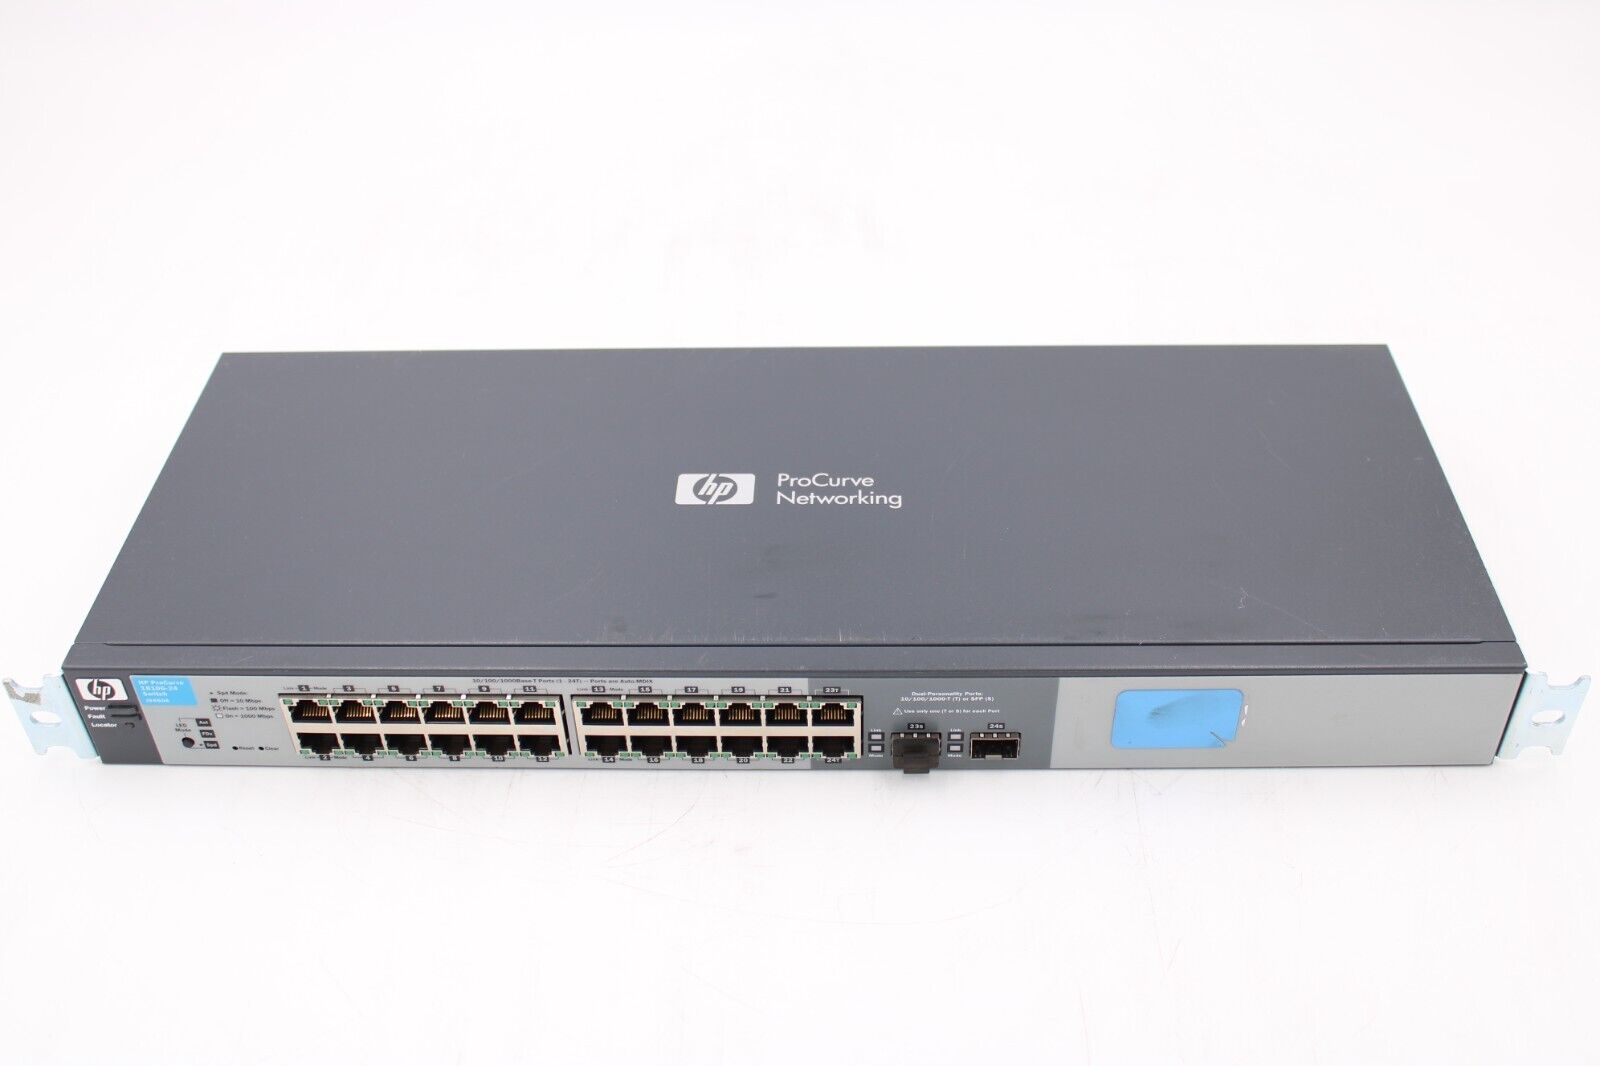 HP Procurve Hewlett Packard J9450A 1810-24G Layer 2 Gigabit Switch TESTED